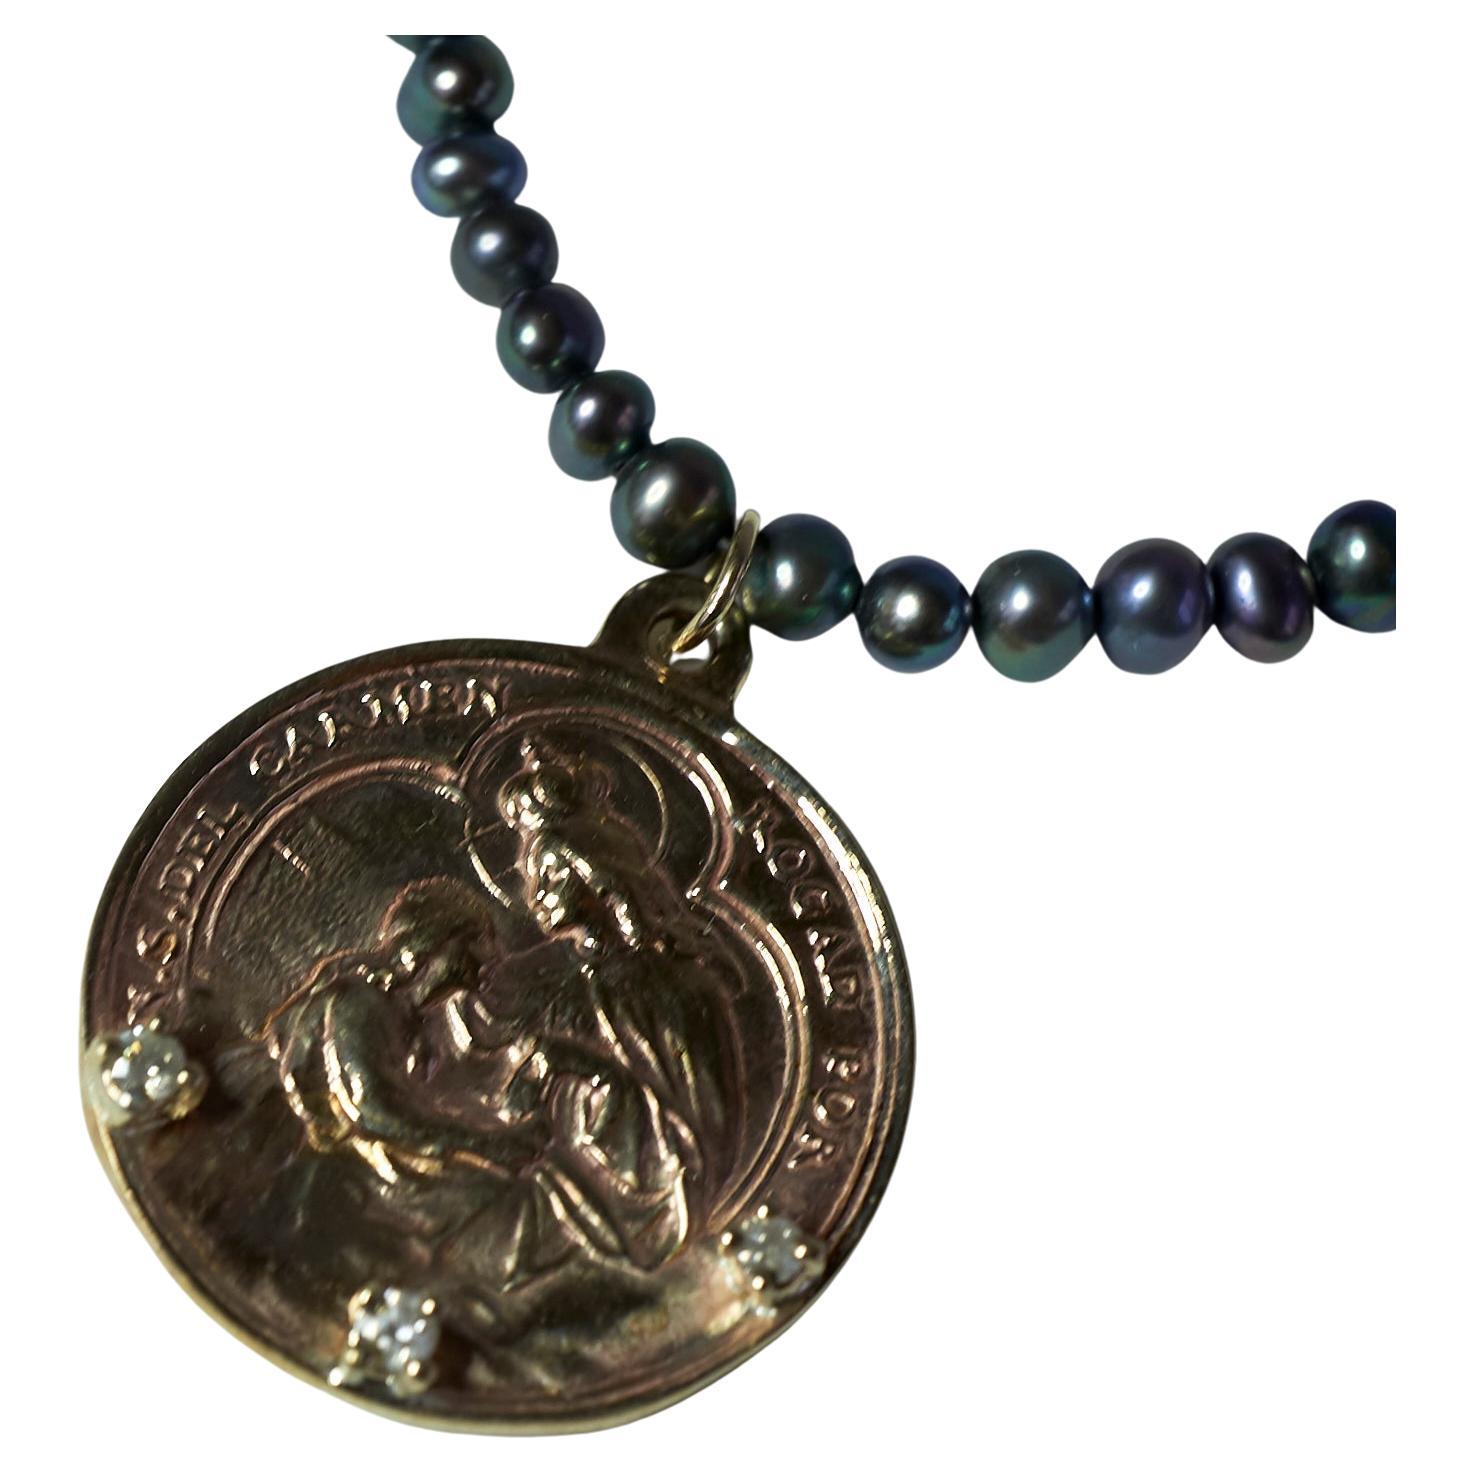 Brilliant Cut Diamond Virgin Mary Medal Necklace Choker Black Pearl Bead Chain J Dauphin For Sale